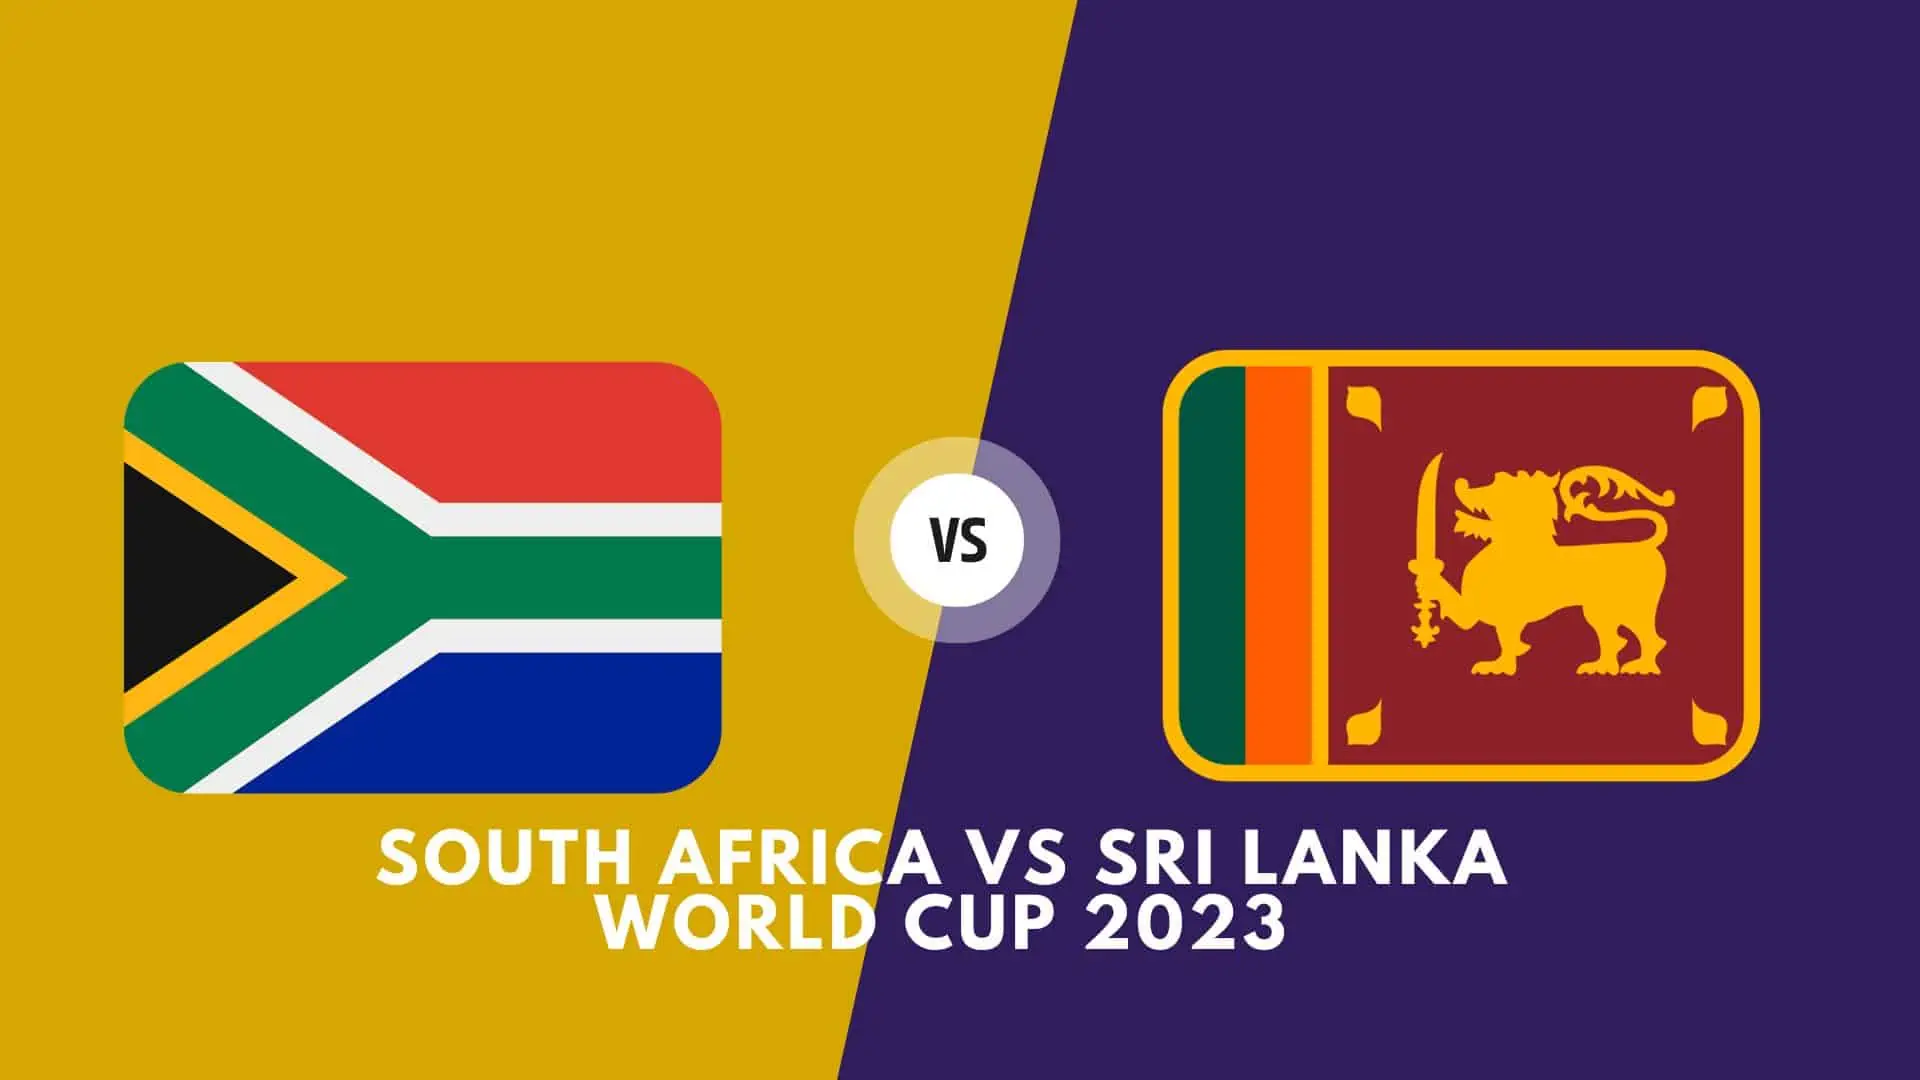 South Africa vs Sri Lanka World Cup 2023